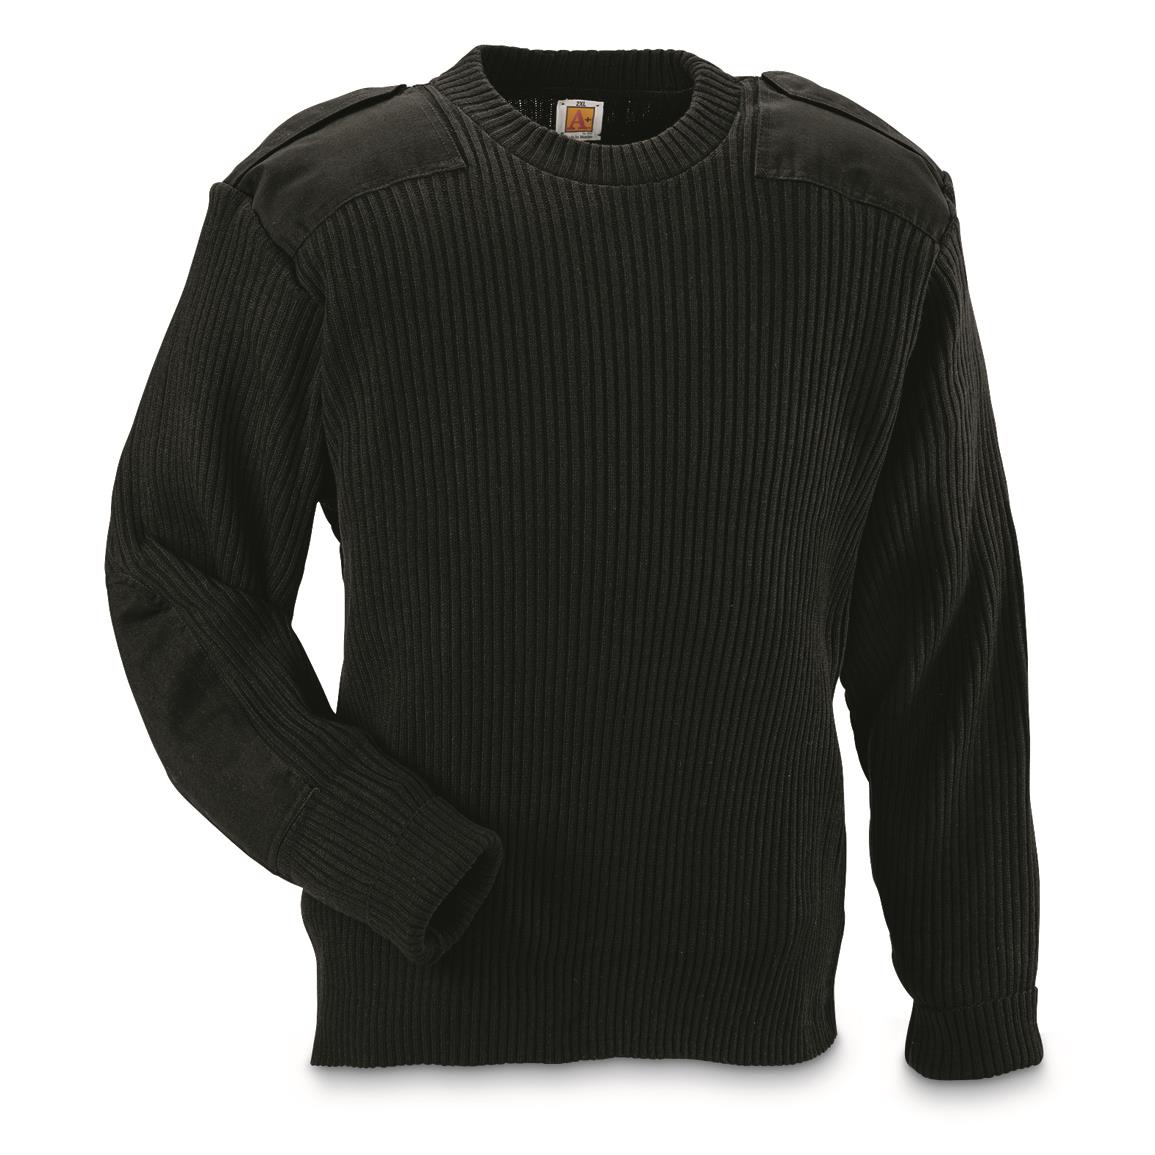 U.S. Military Surplus Commando Sweater, New, Black